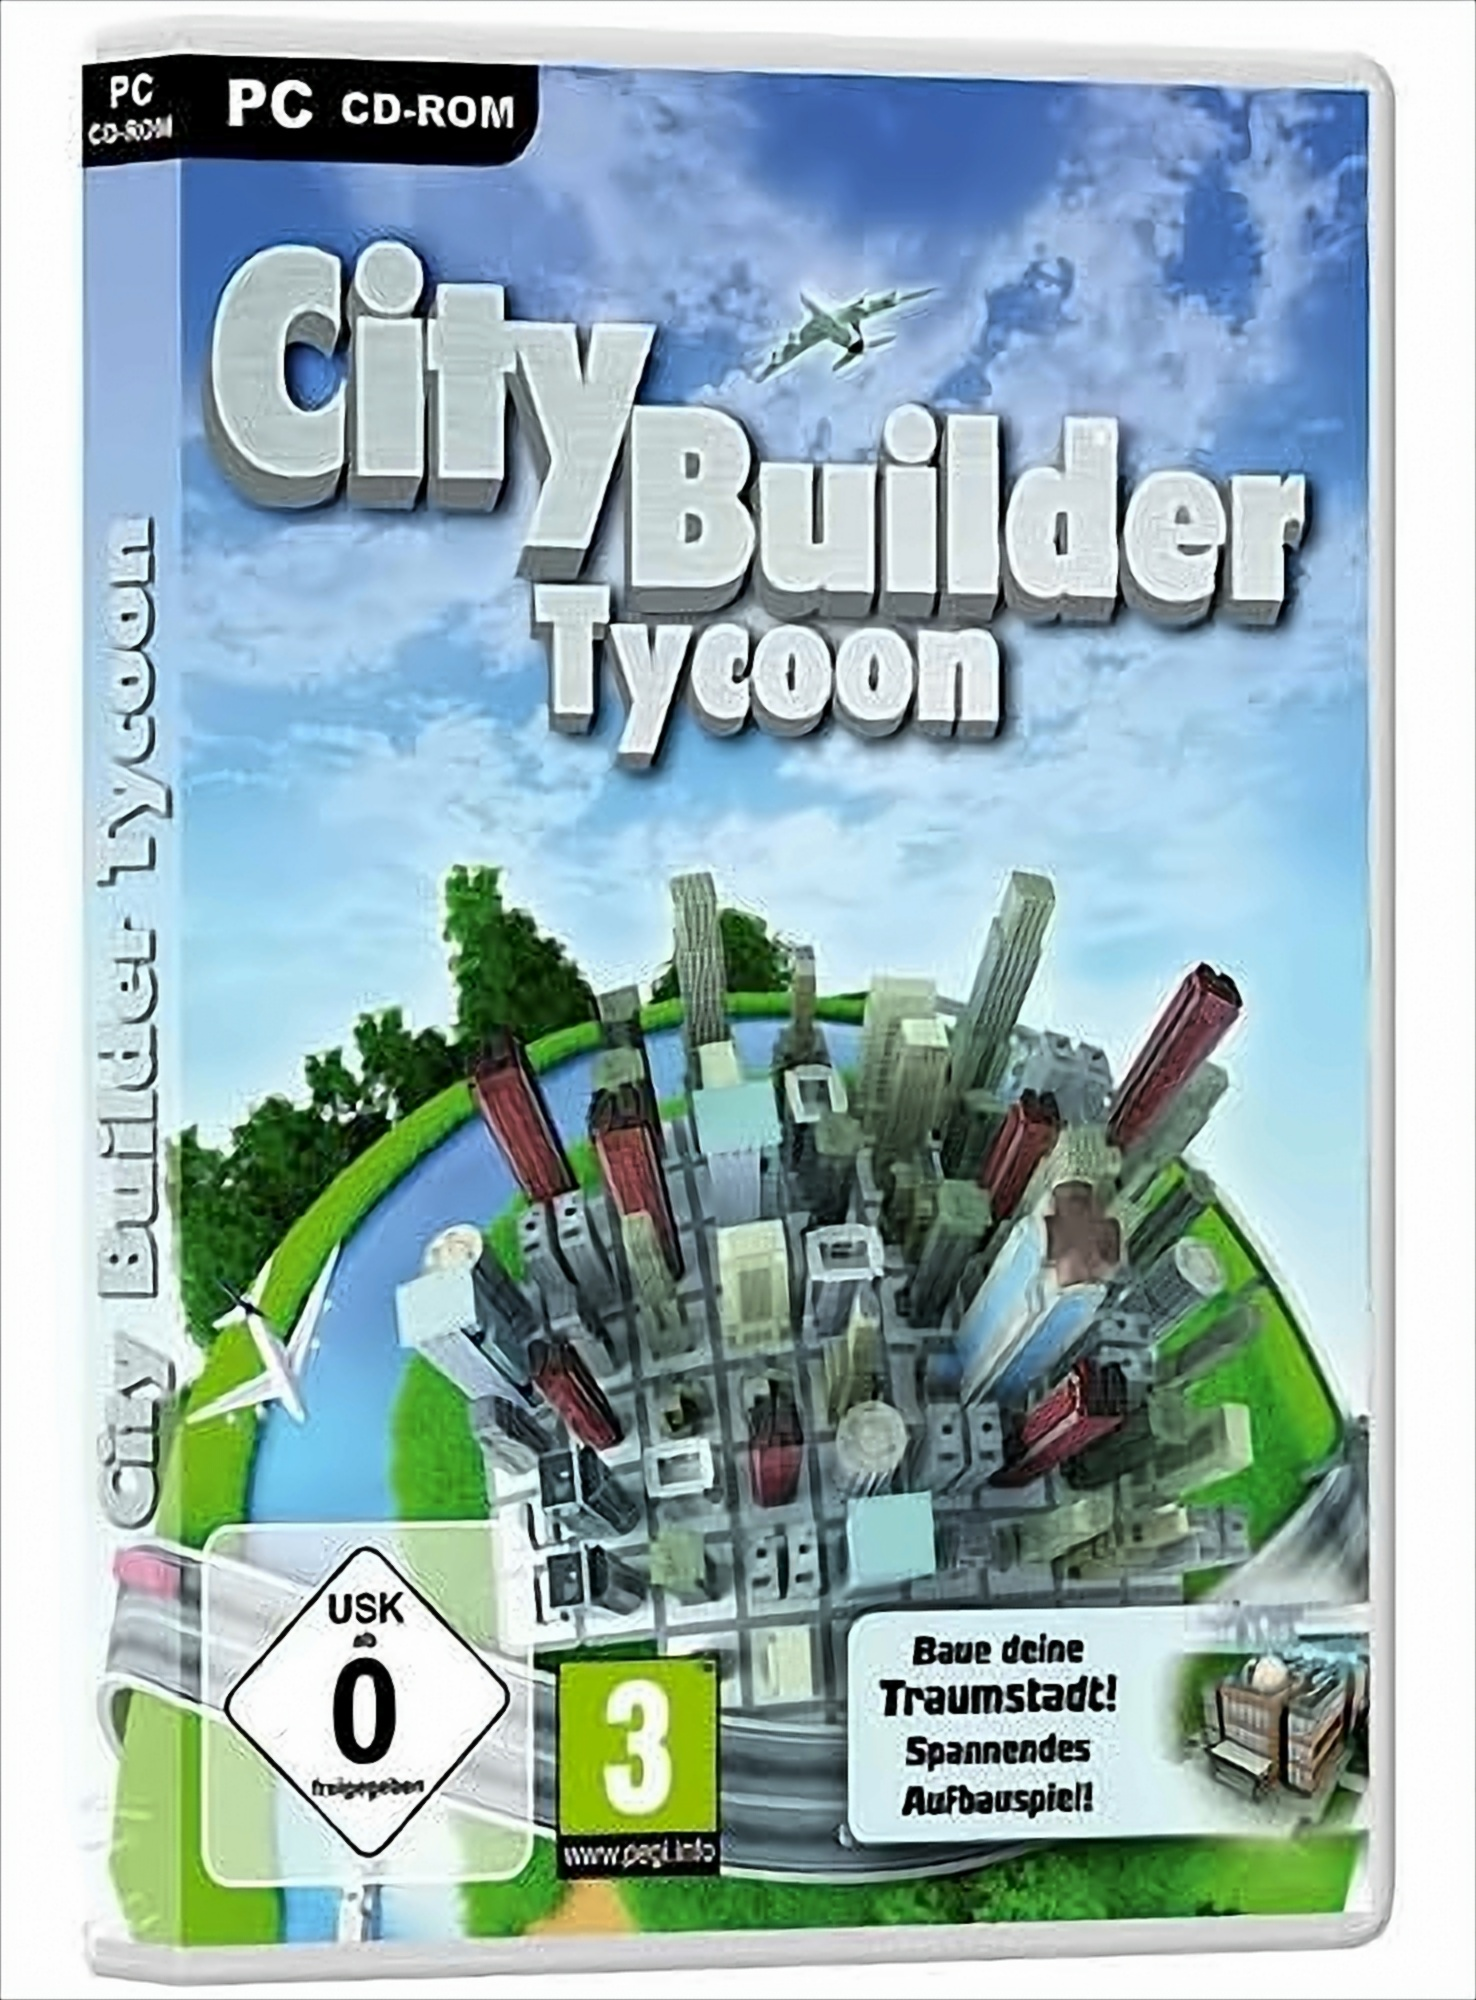 City Builder - Tycoon [PC